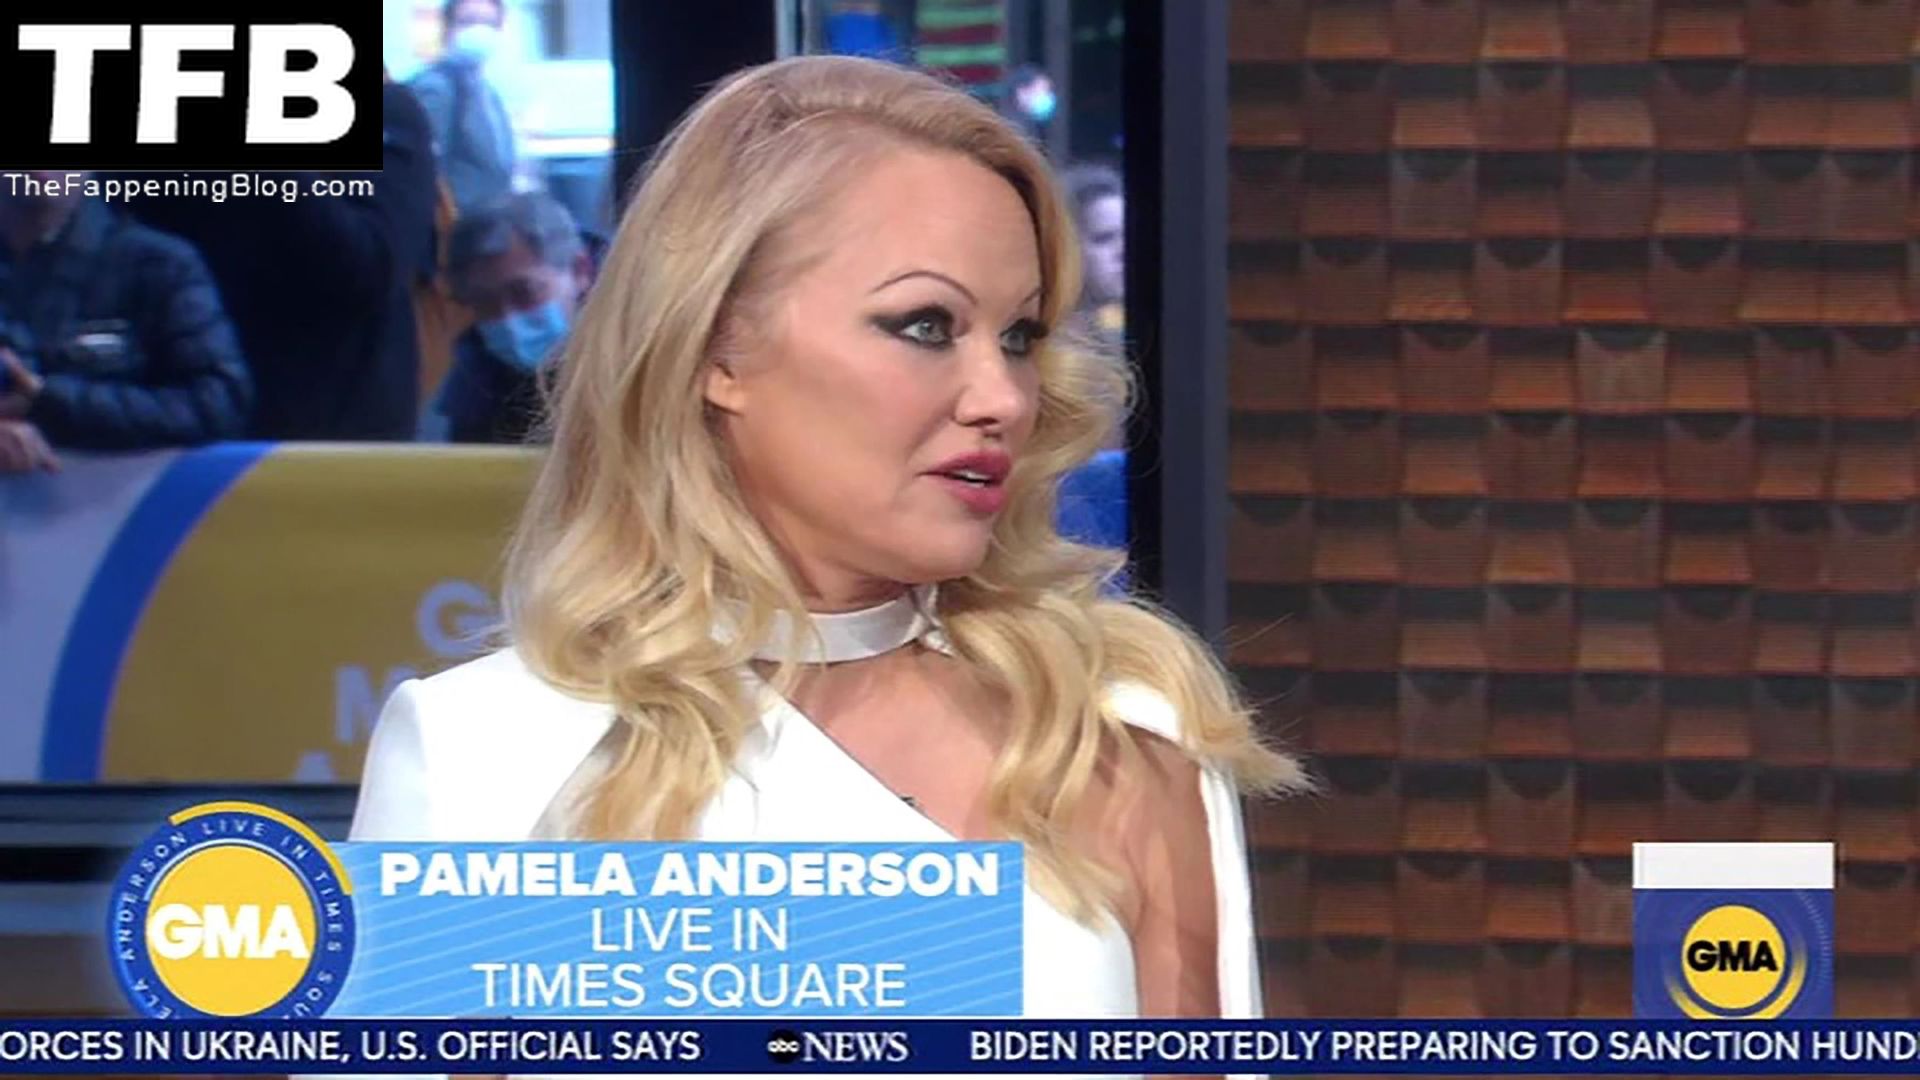 Pamela-Anderson-Hot-The-Fappening-Blog-23.jpg